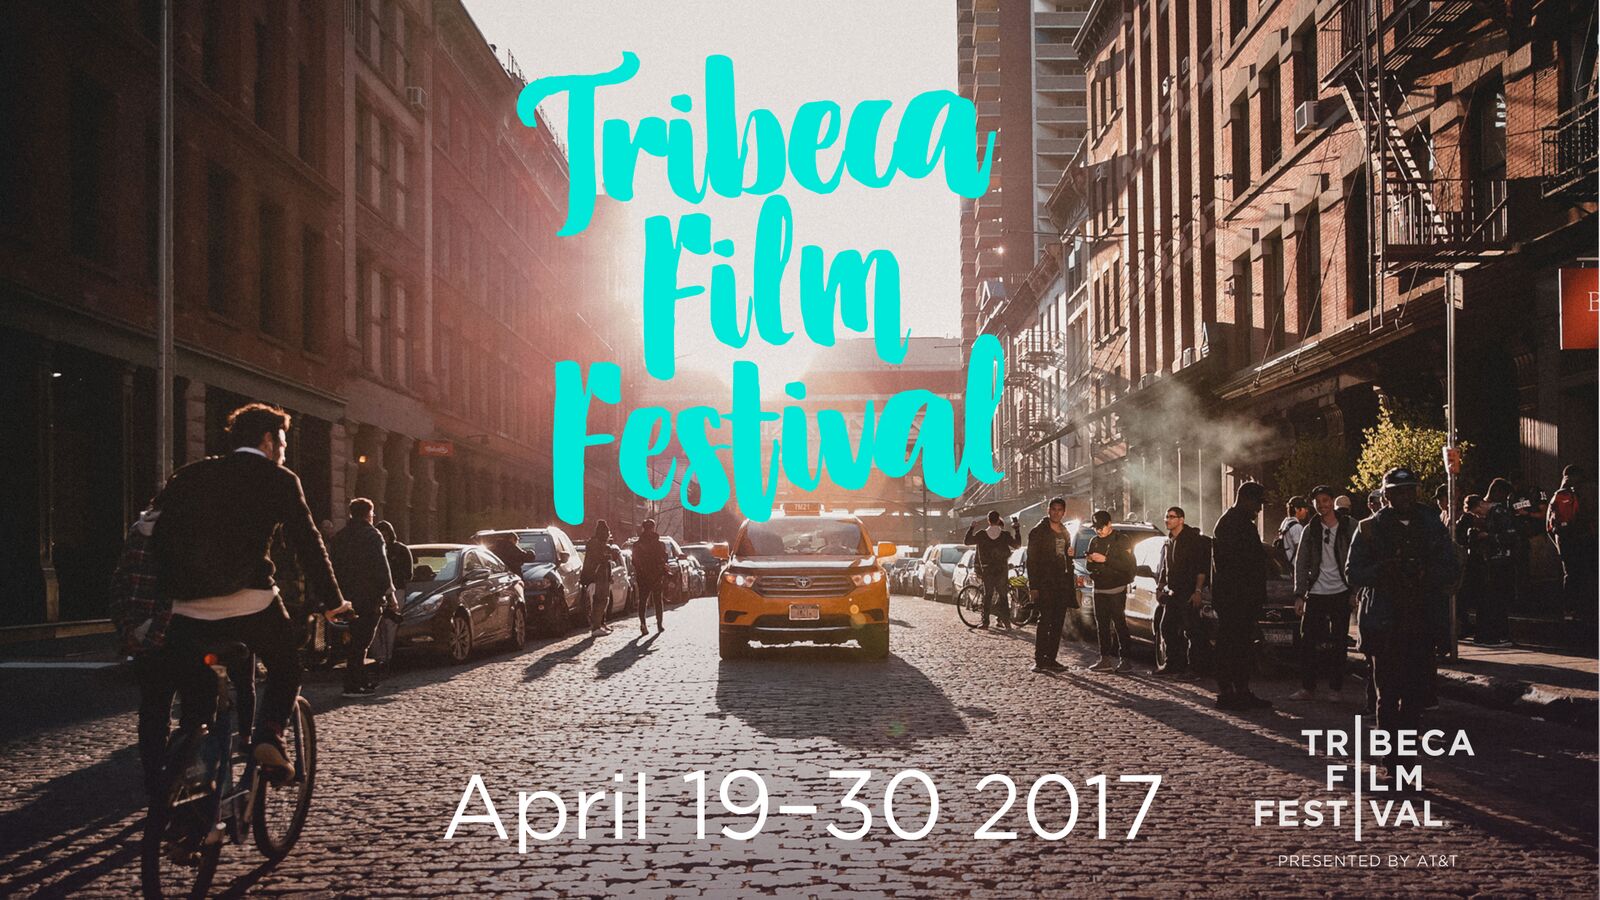 Tribeca Film Festival 2017 promo. Photo by: Tribeca Film Festival